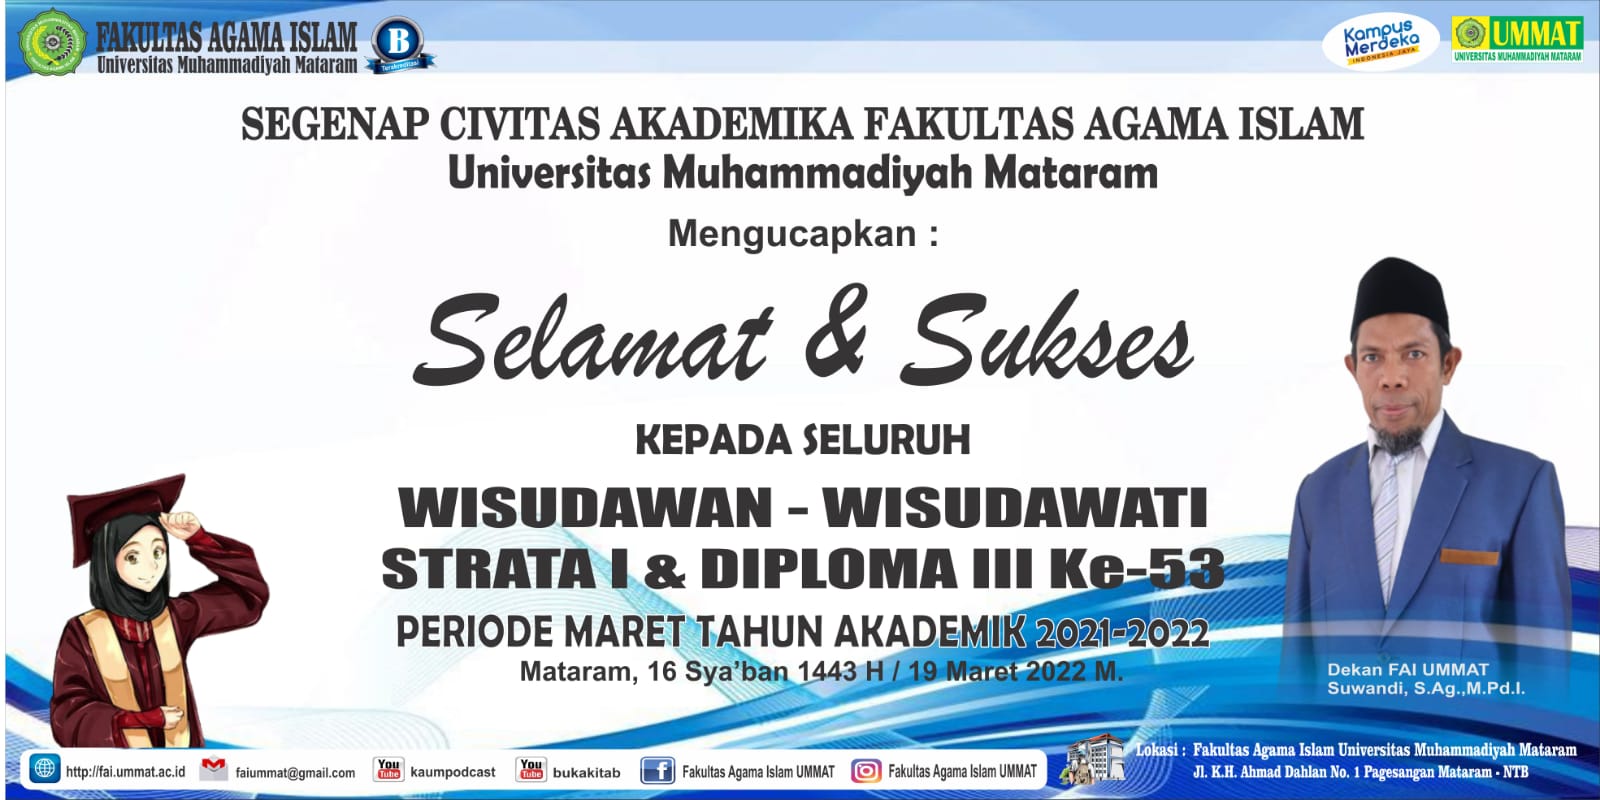 Wisuda Sarjana S1 & Diploma III Ke-53 Universitas Muhammadiyah Mataram